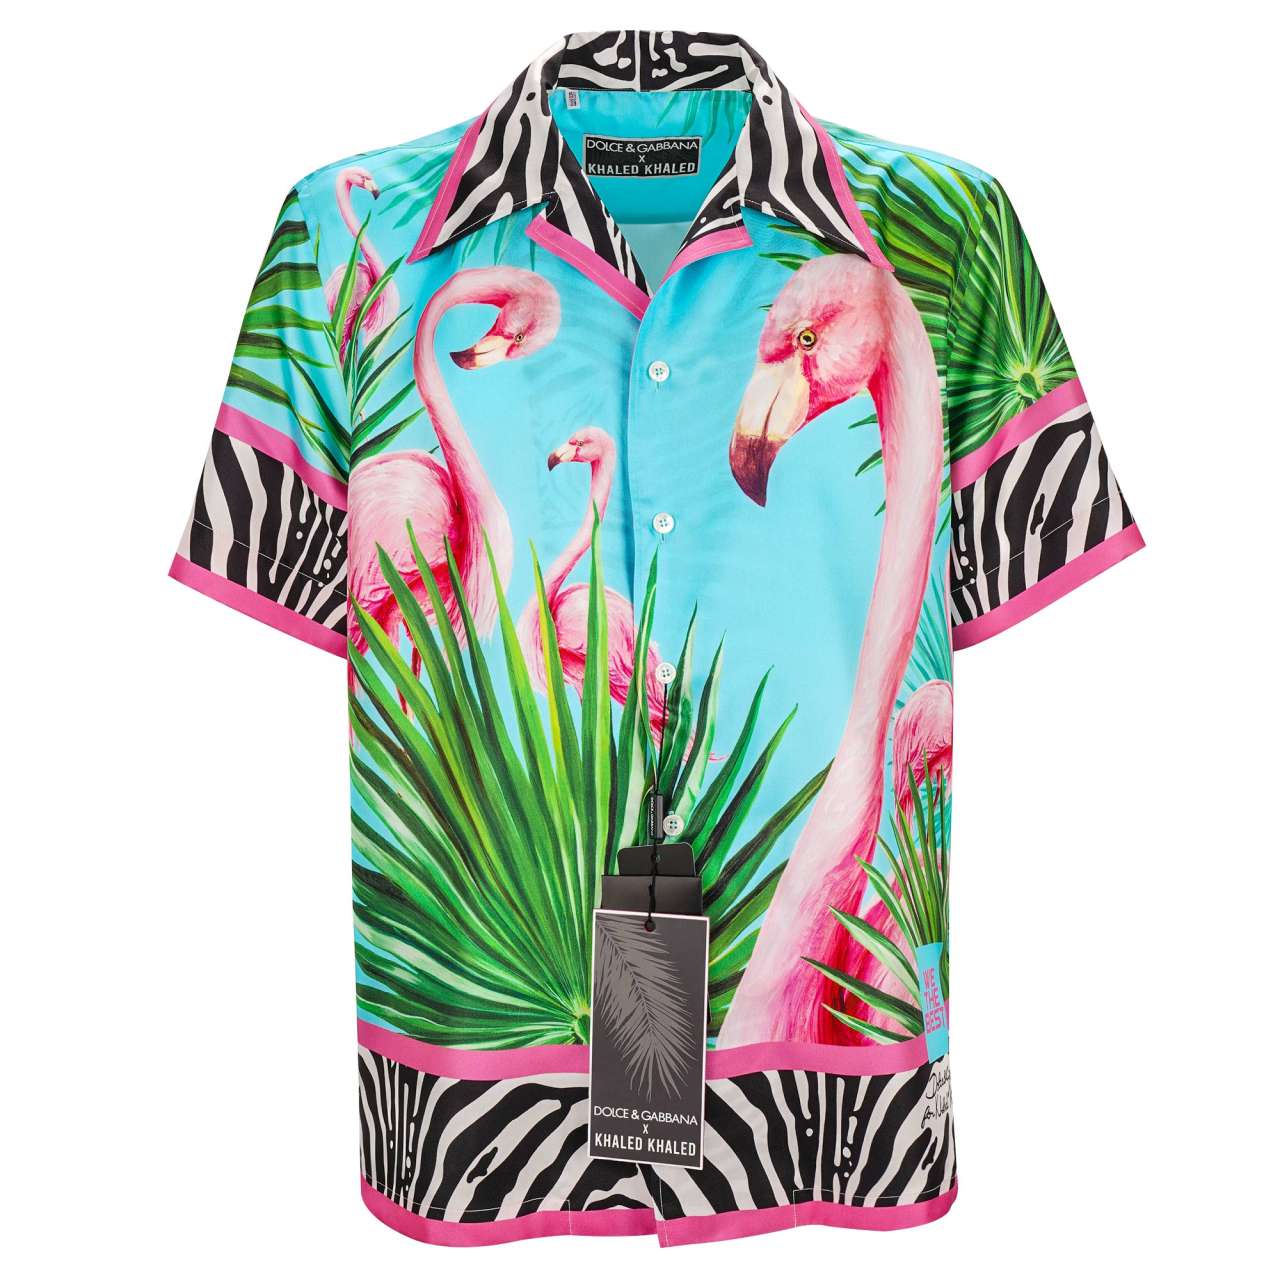 Dolce & Gabbana - DJ Khaled Silk Flamingo Zebra Shirt with Sunglasses and CD 43 For Sale